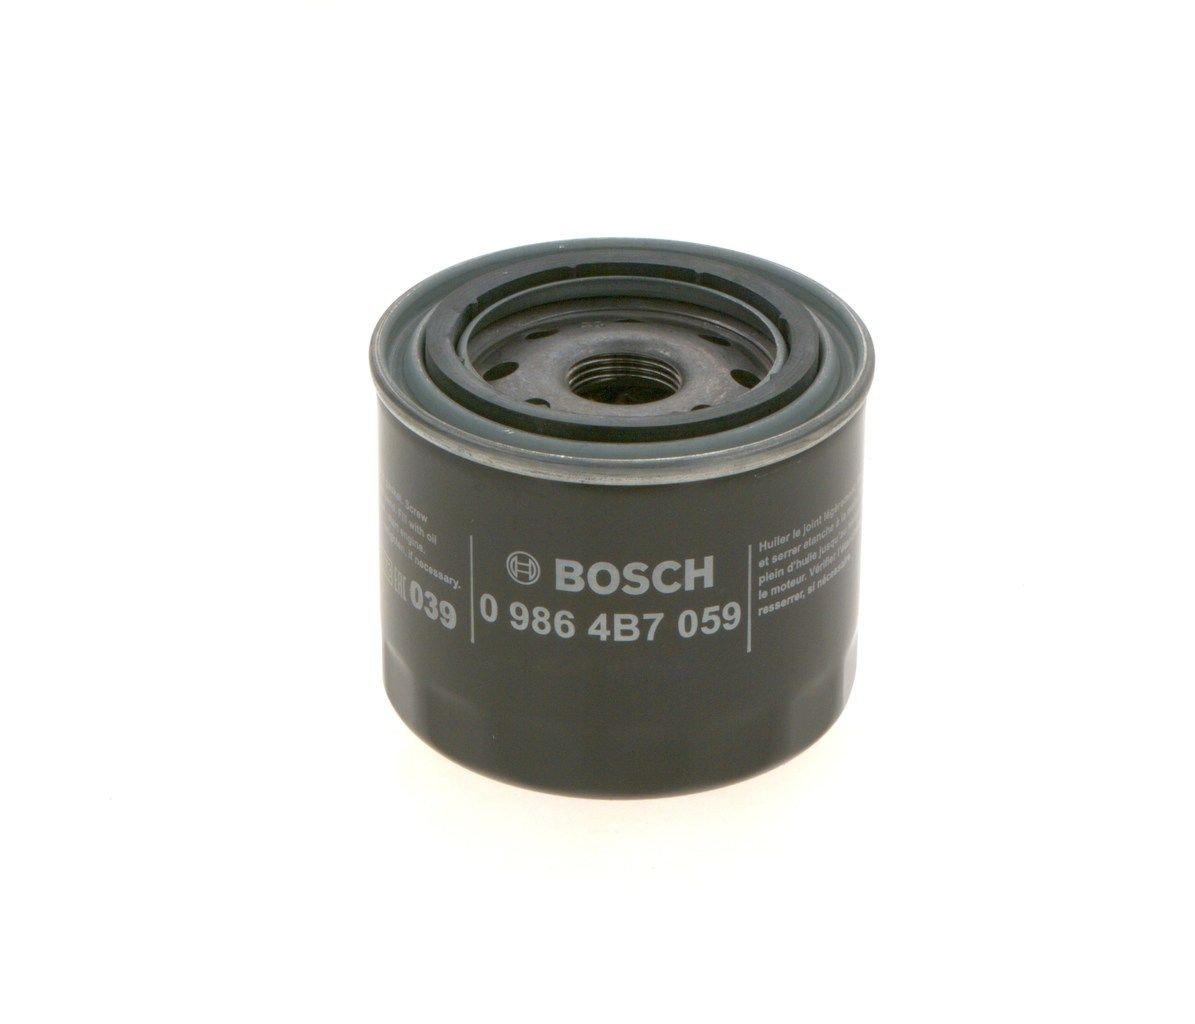 BOSCH 0 986 4B7 059 Olejový filtr R: 82,2mm, R: 82,2mm, Vnitřni průměr 2: 57mm, Vnitřni průměr 2: 66mm, Výška: 72mm